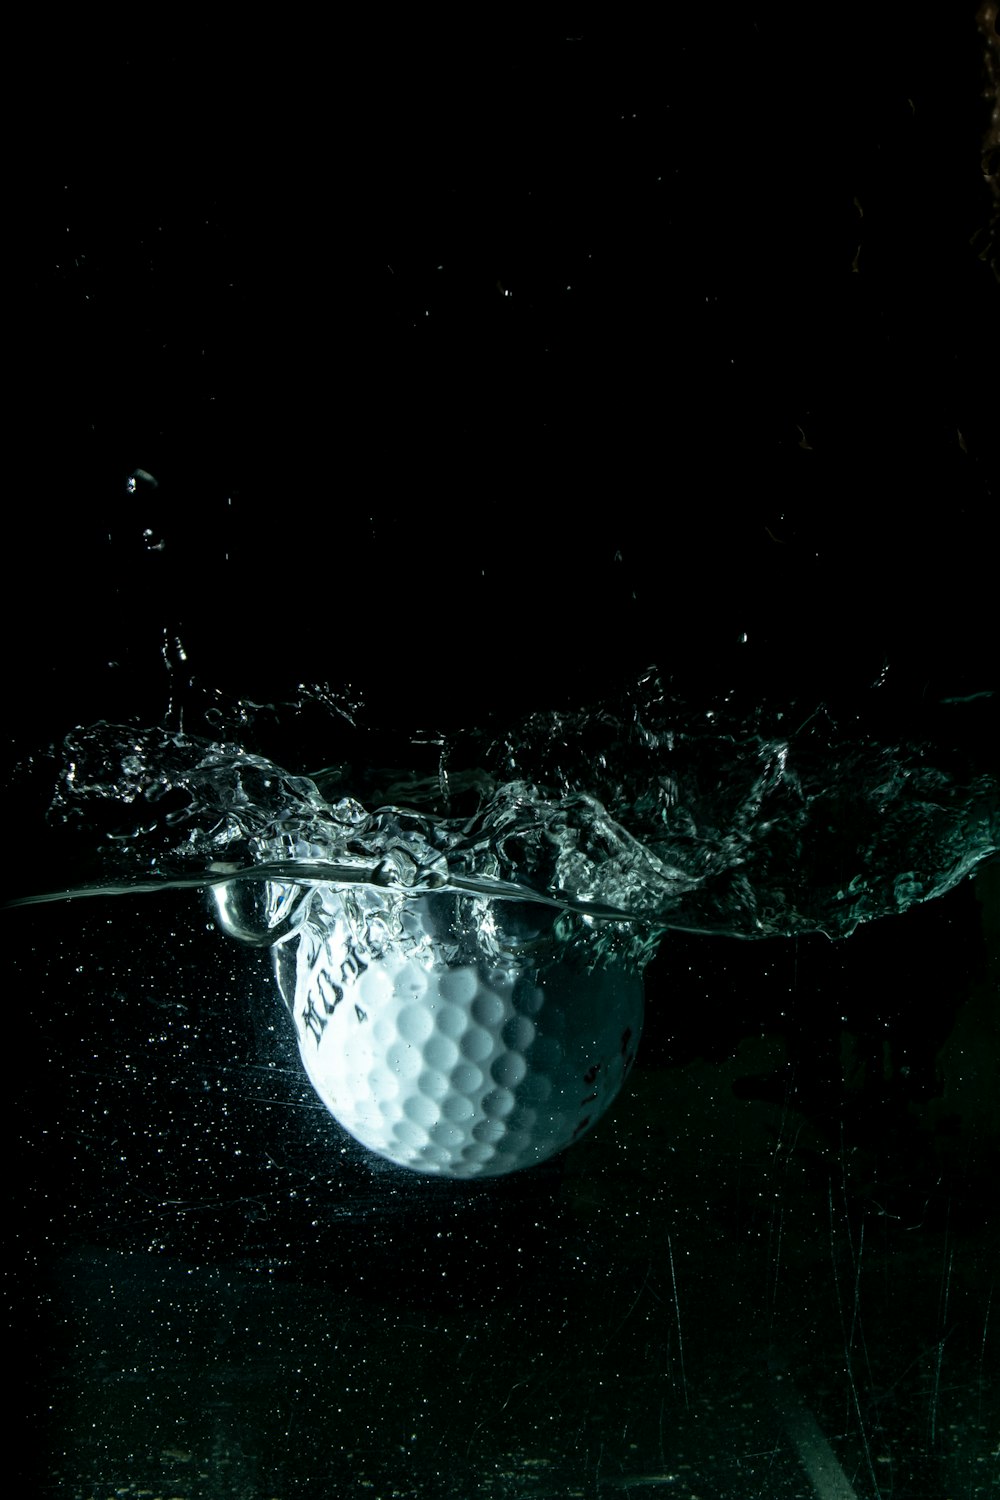 bola de golfe branca na água